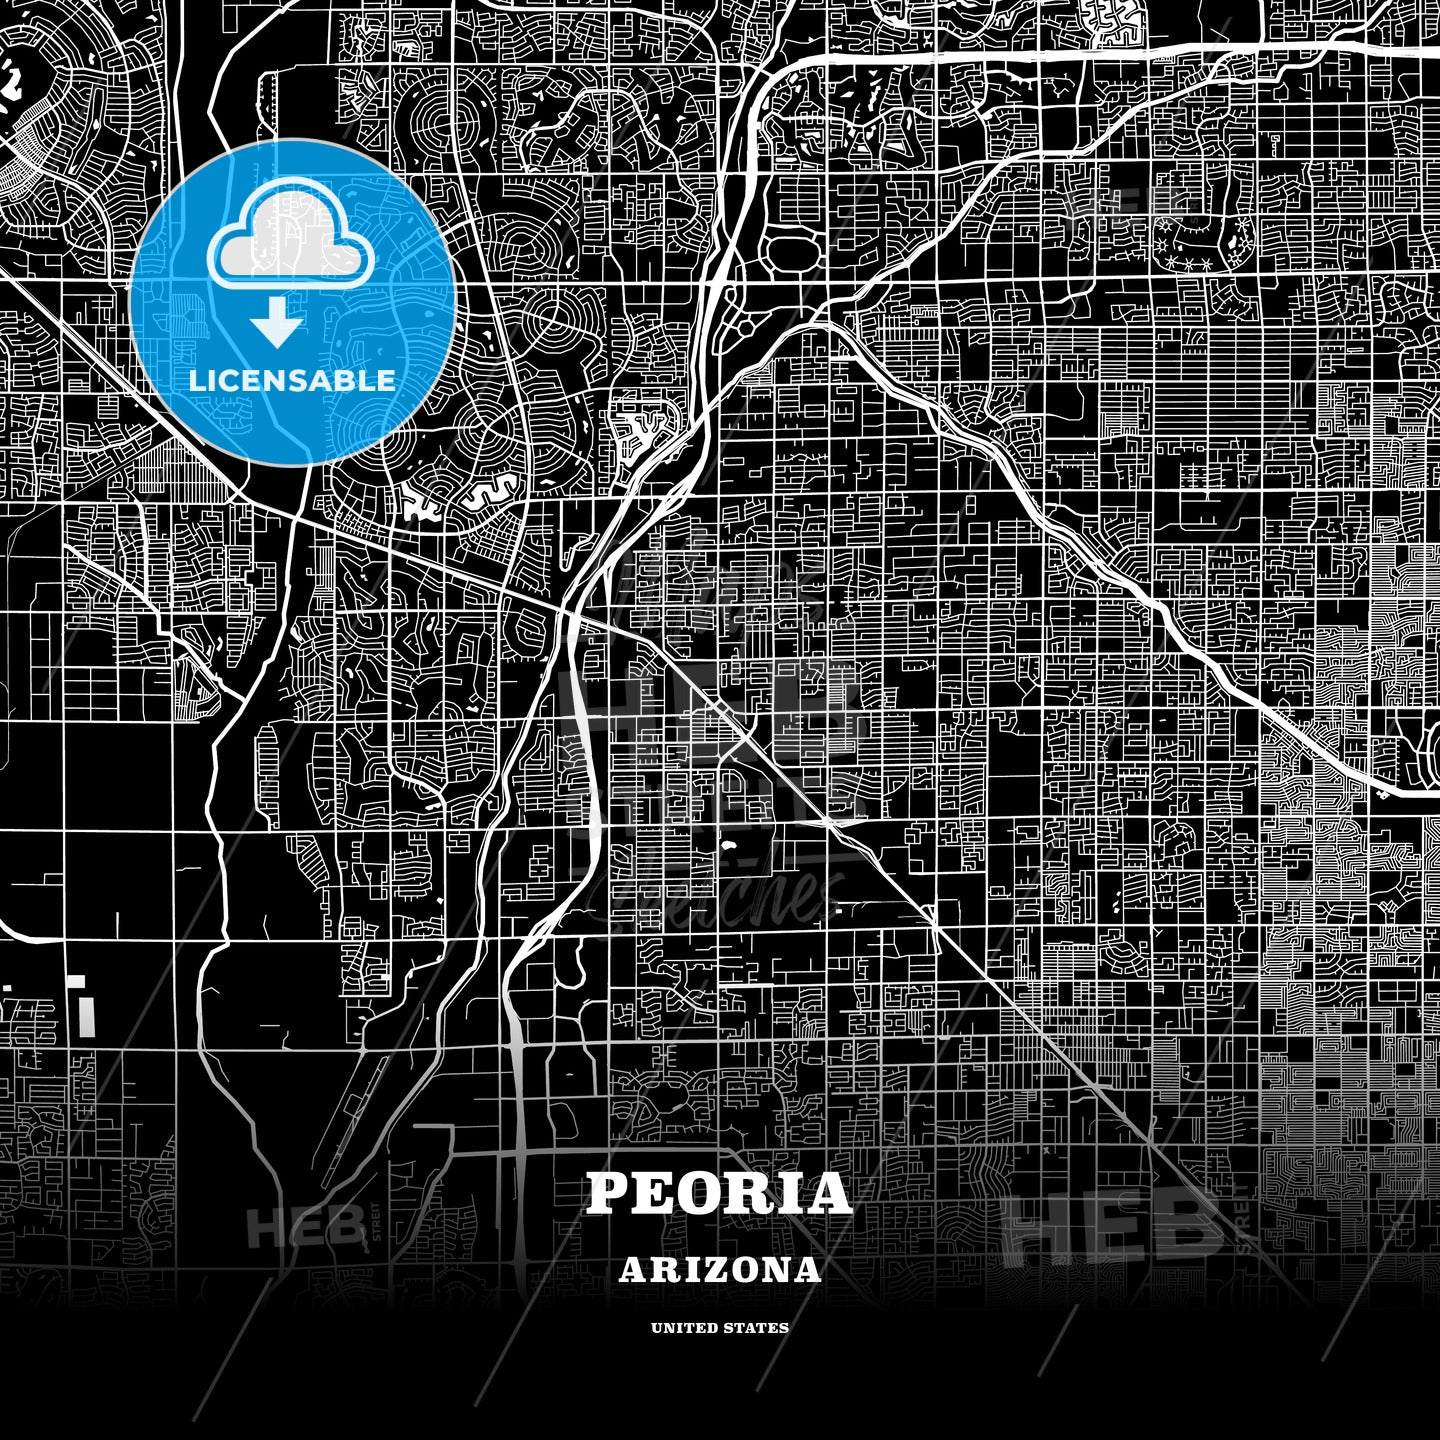 Peoria, Arizona, USA map